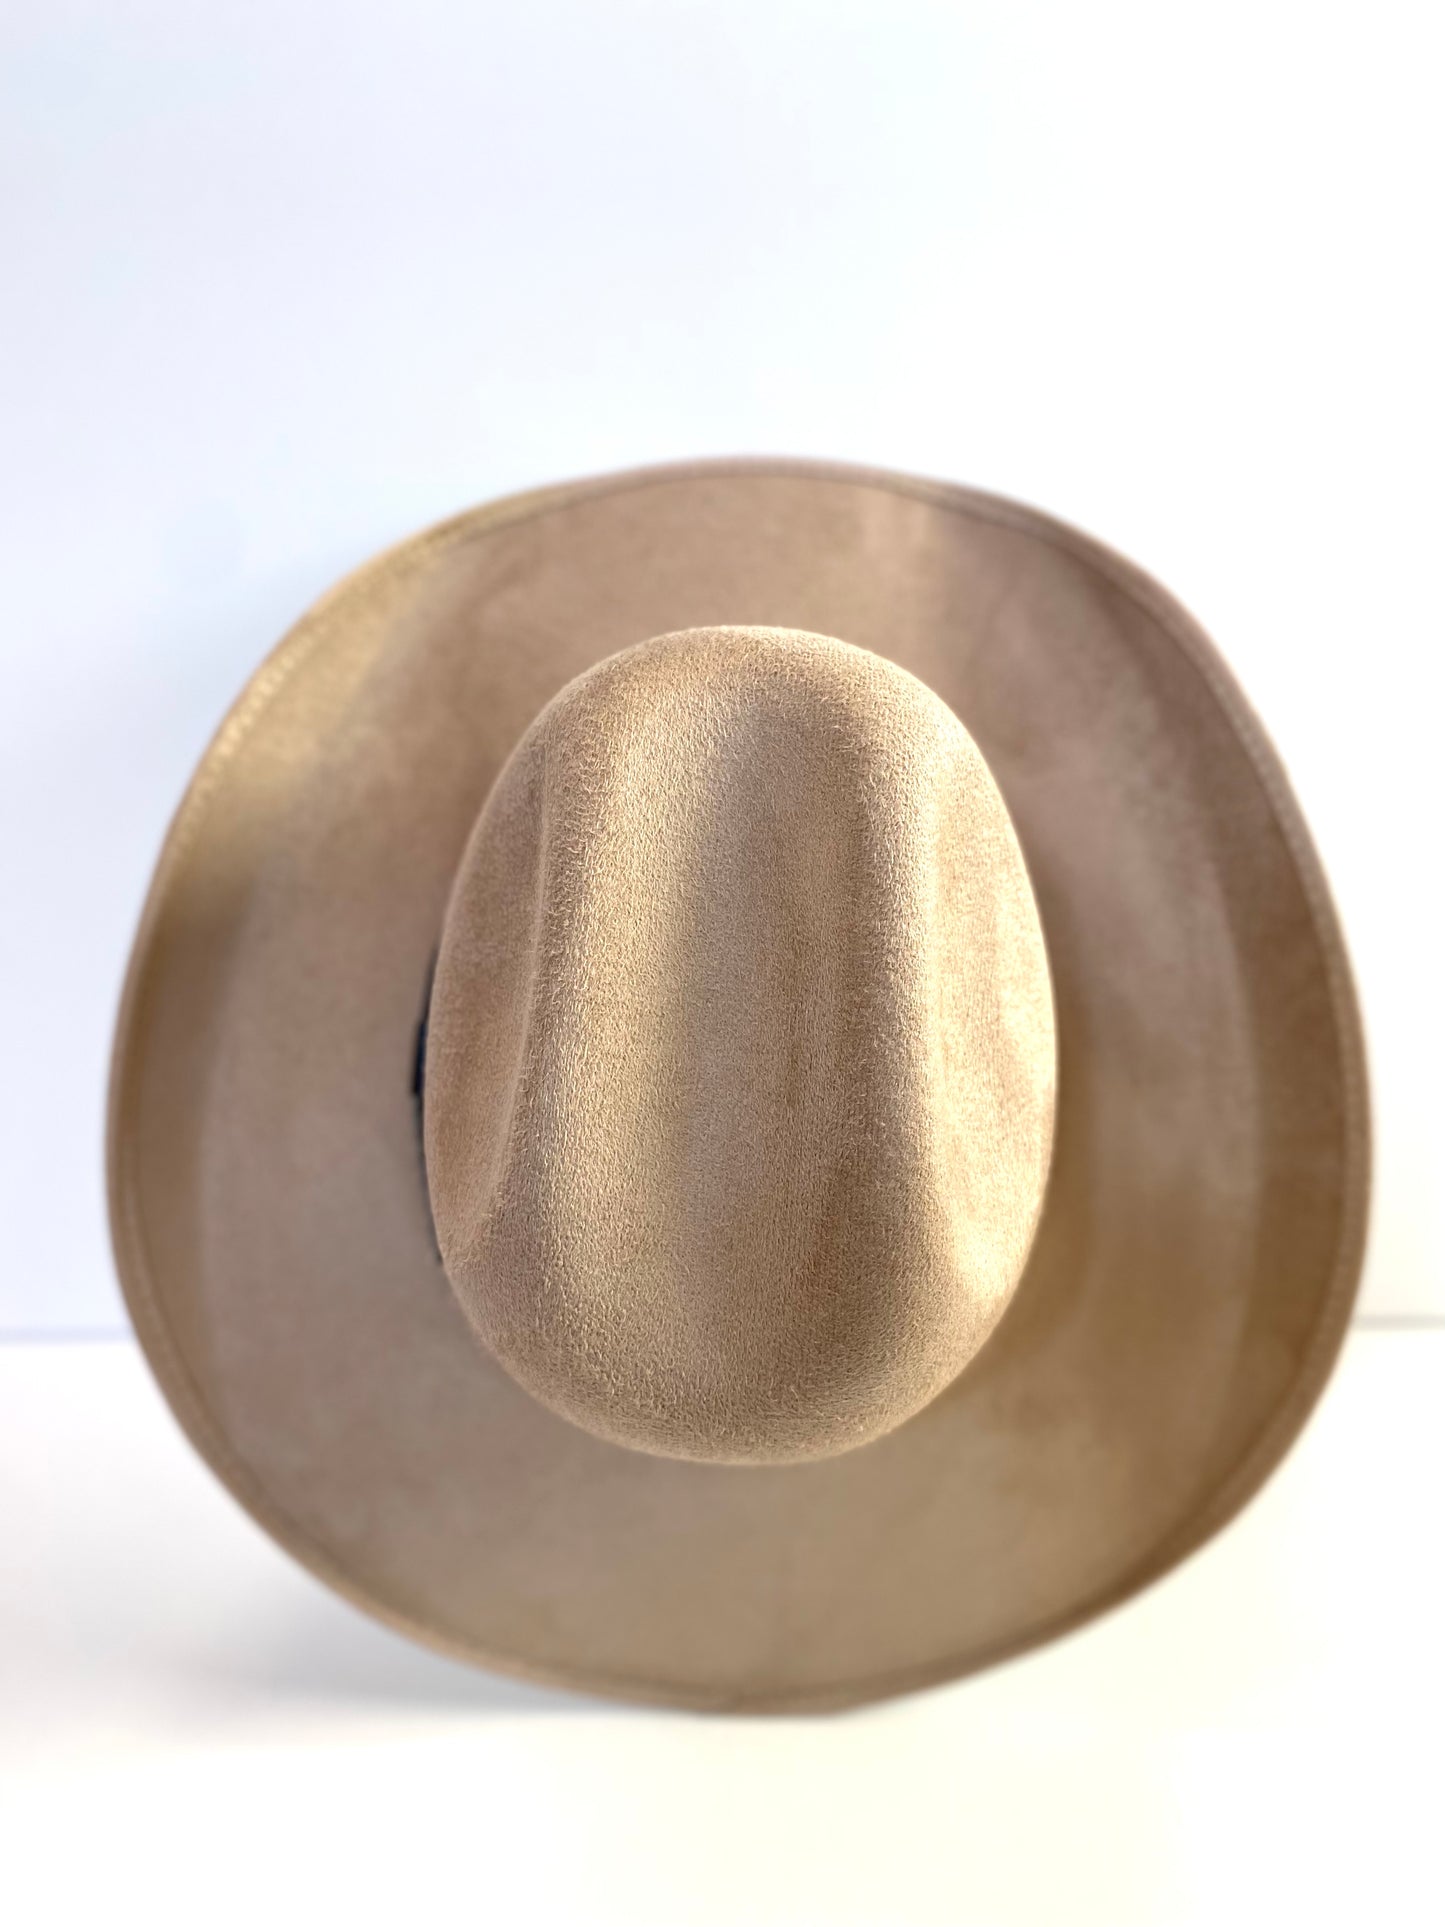 Austin Vegan Suede Cowboy Hat- Sand